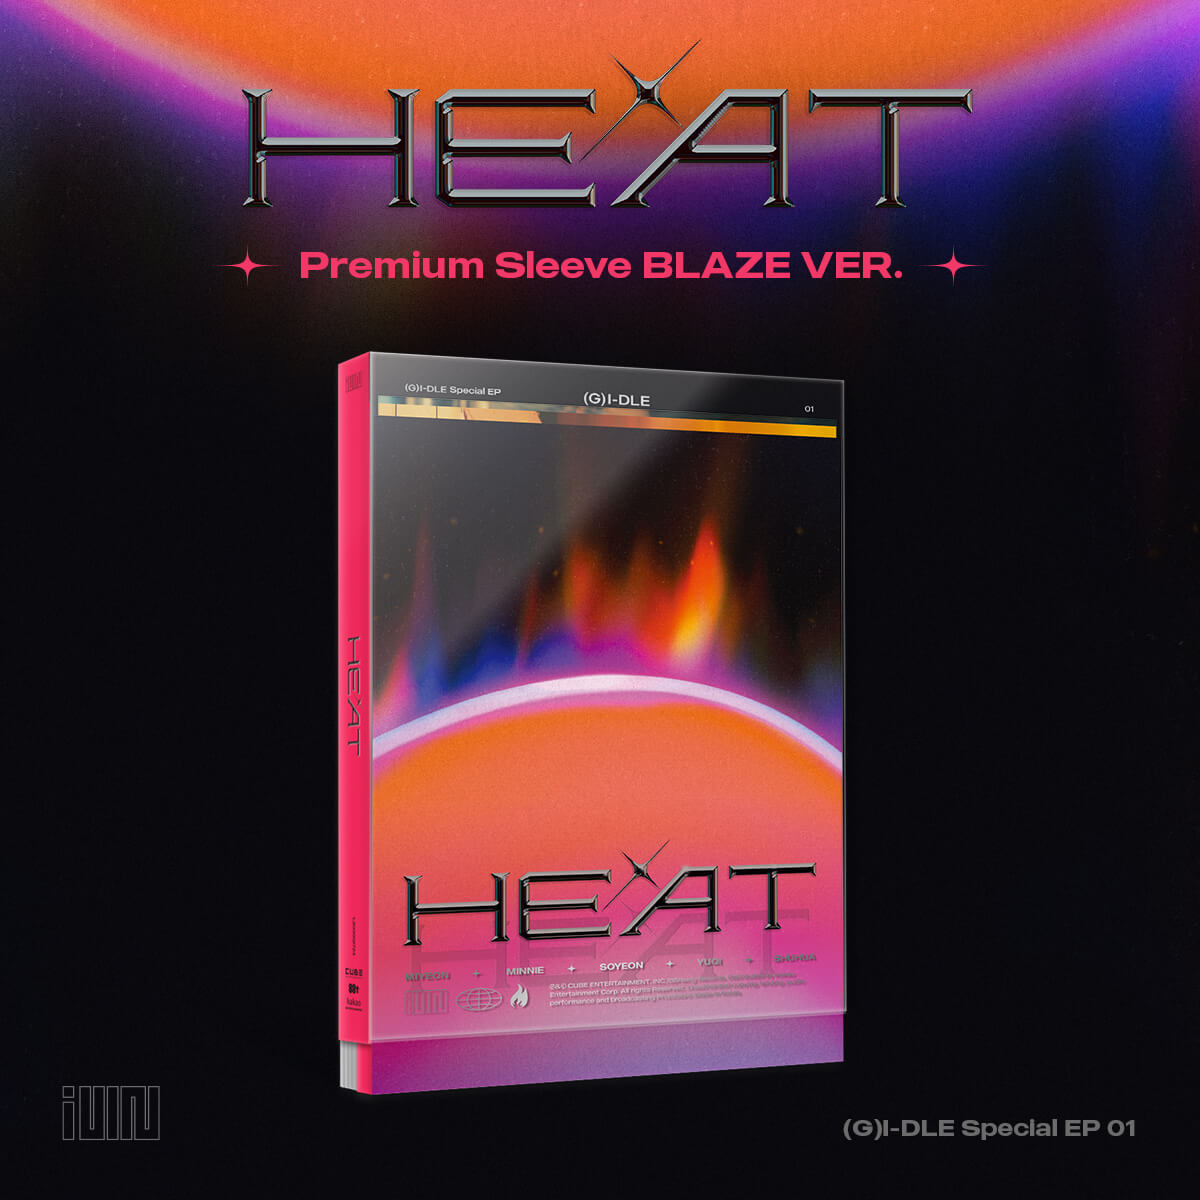 (G)I-DLE Special EP Album HEAT - BLAZE Version